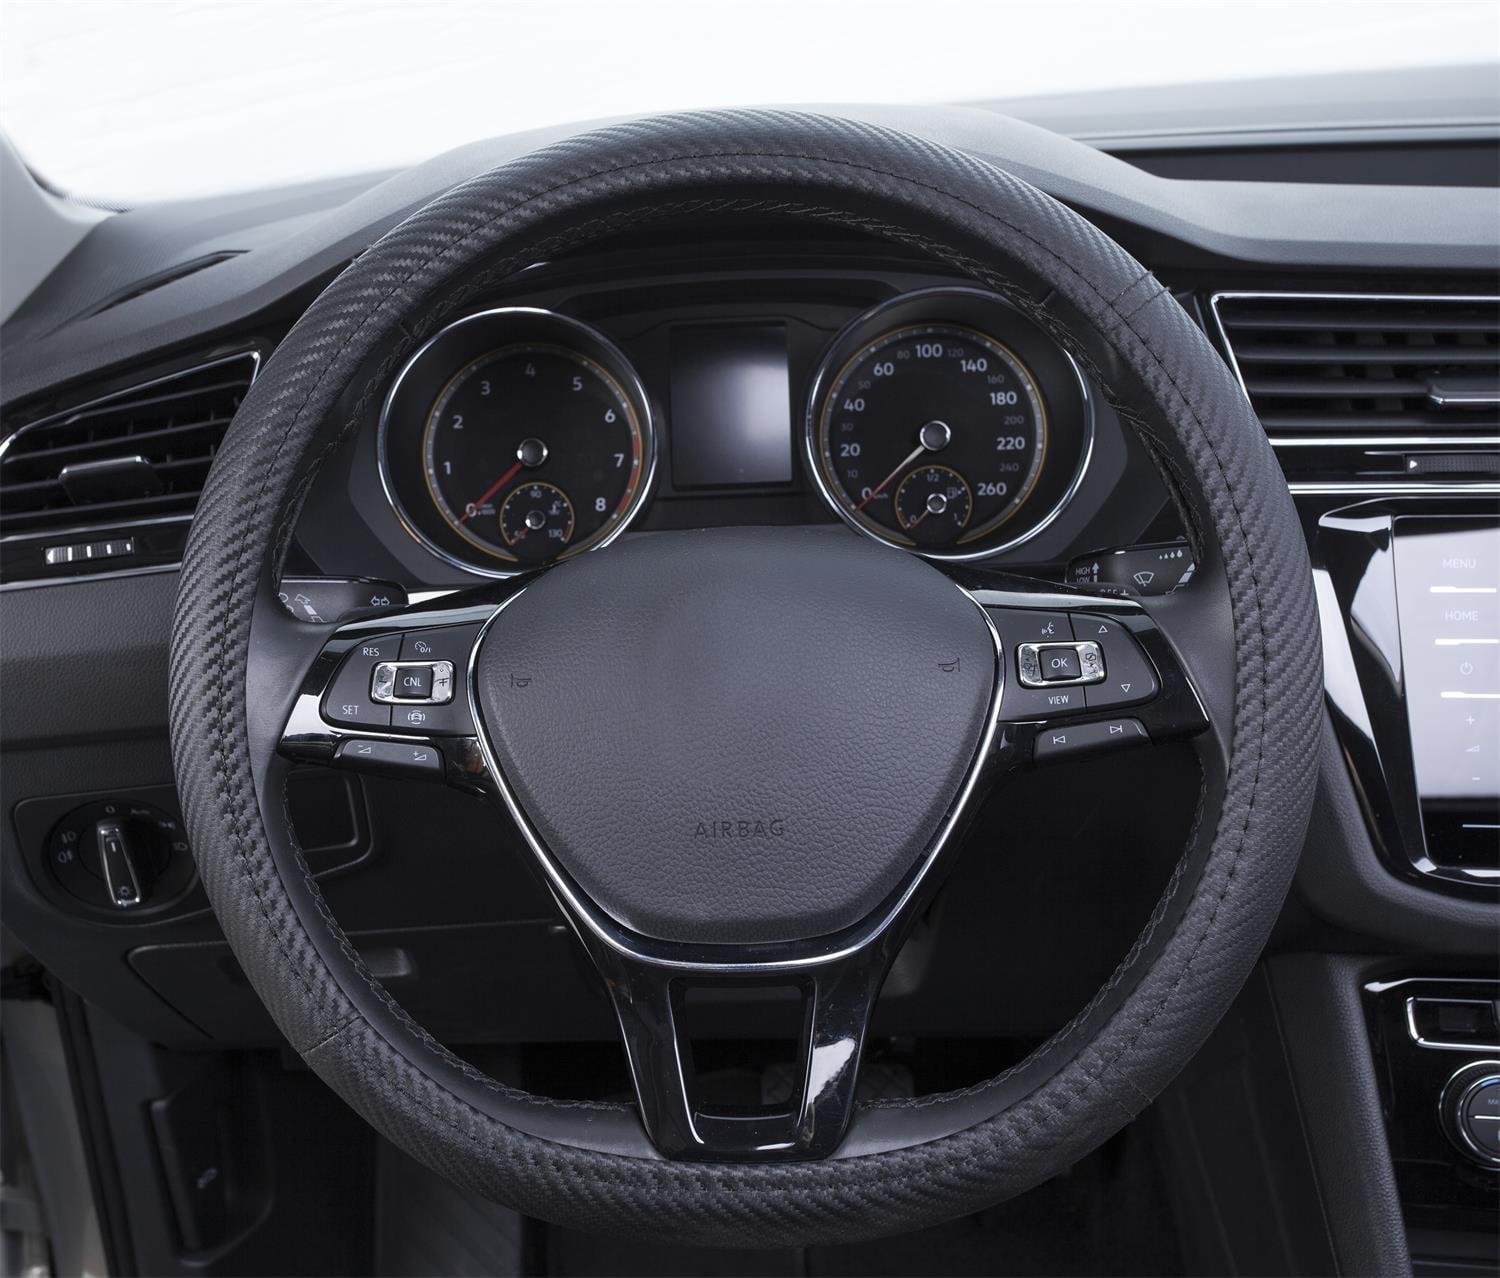 2019 Premium Black Carbon Fiber Leather Steering Wheel Cover Protector Slip-On 